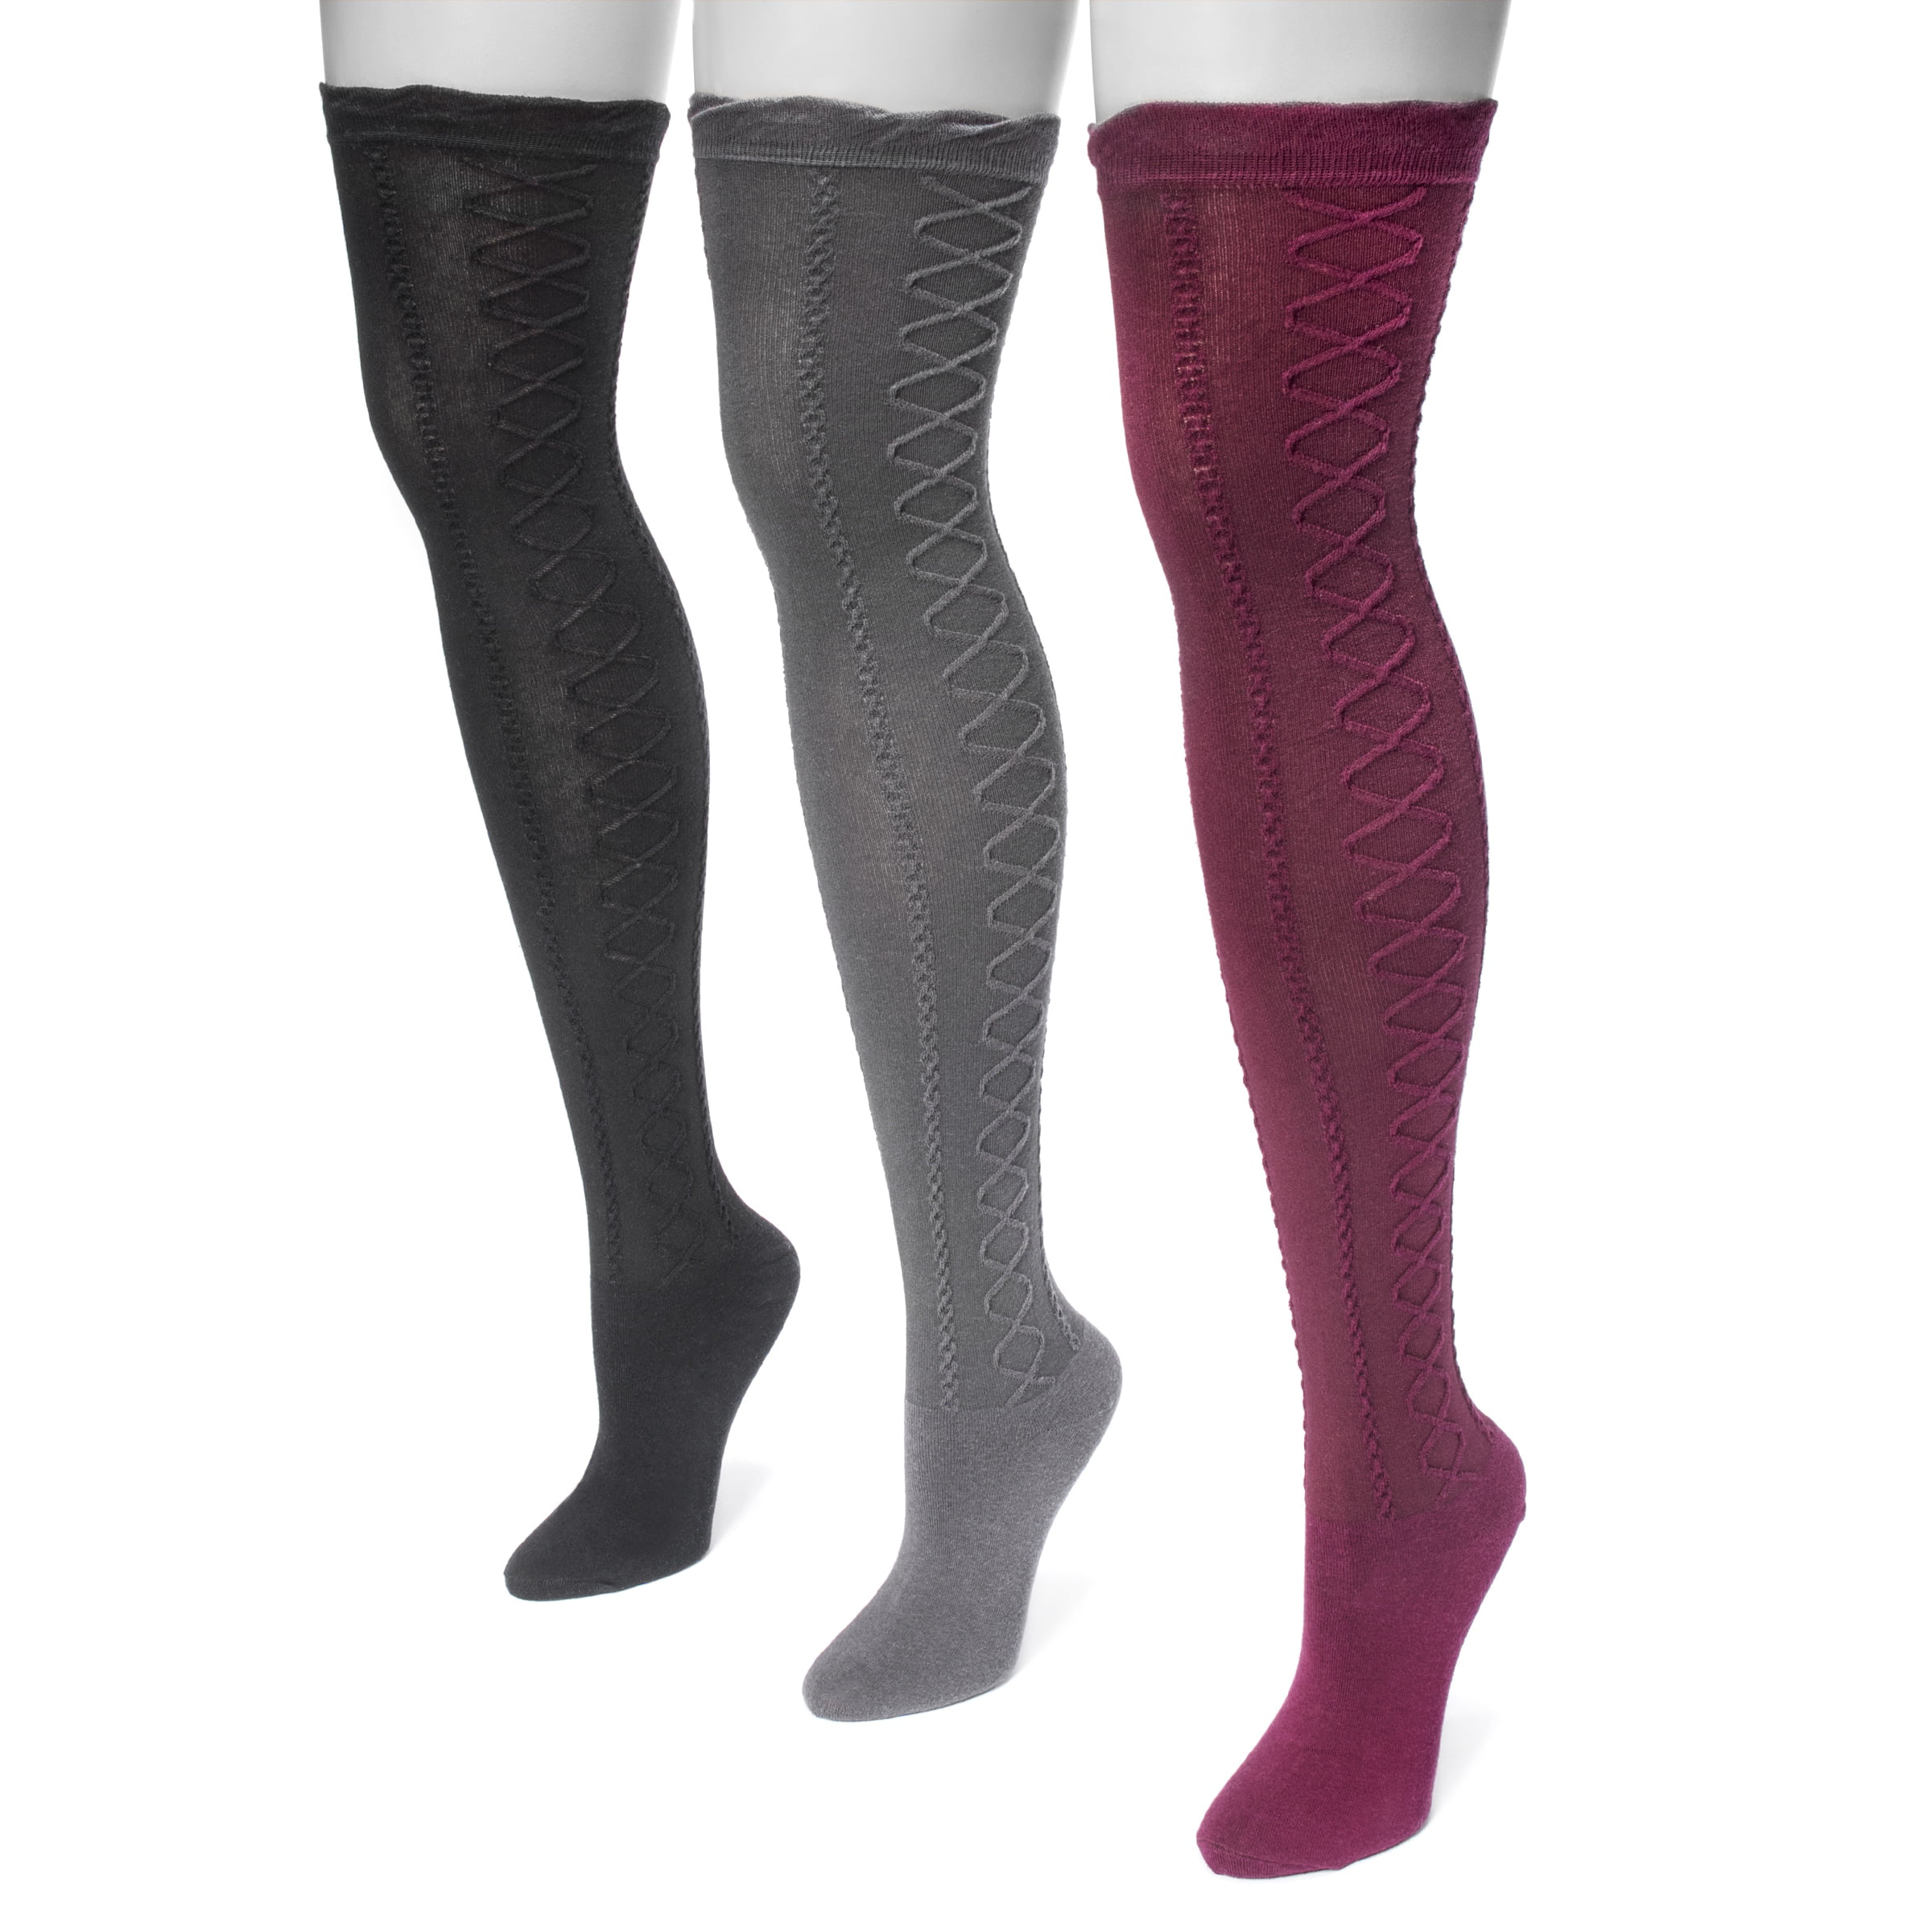 Women's Lace Texture Over the Knee Socks 7 x 3.5 - Walmart.com